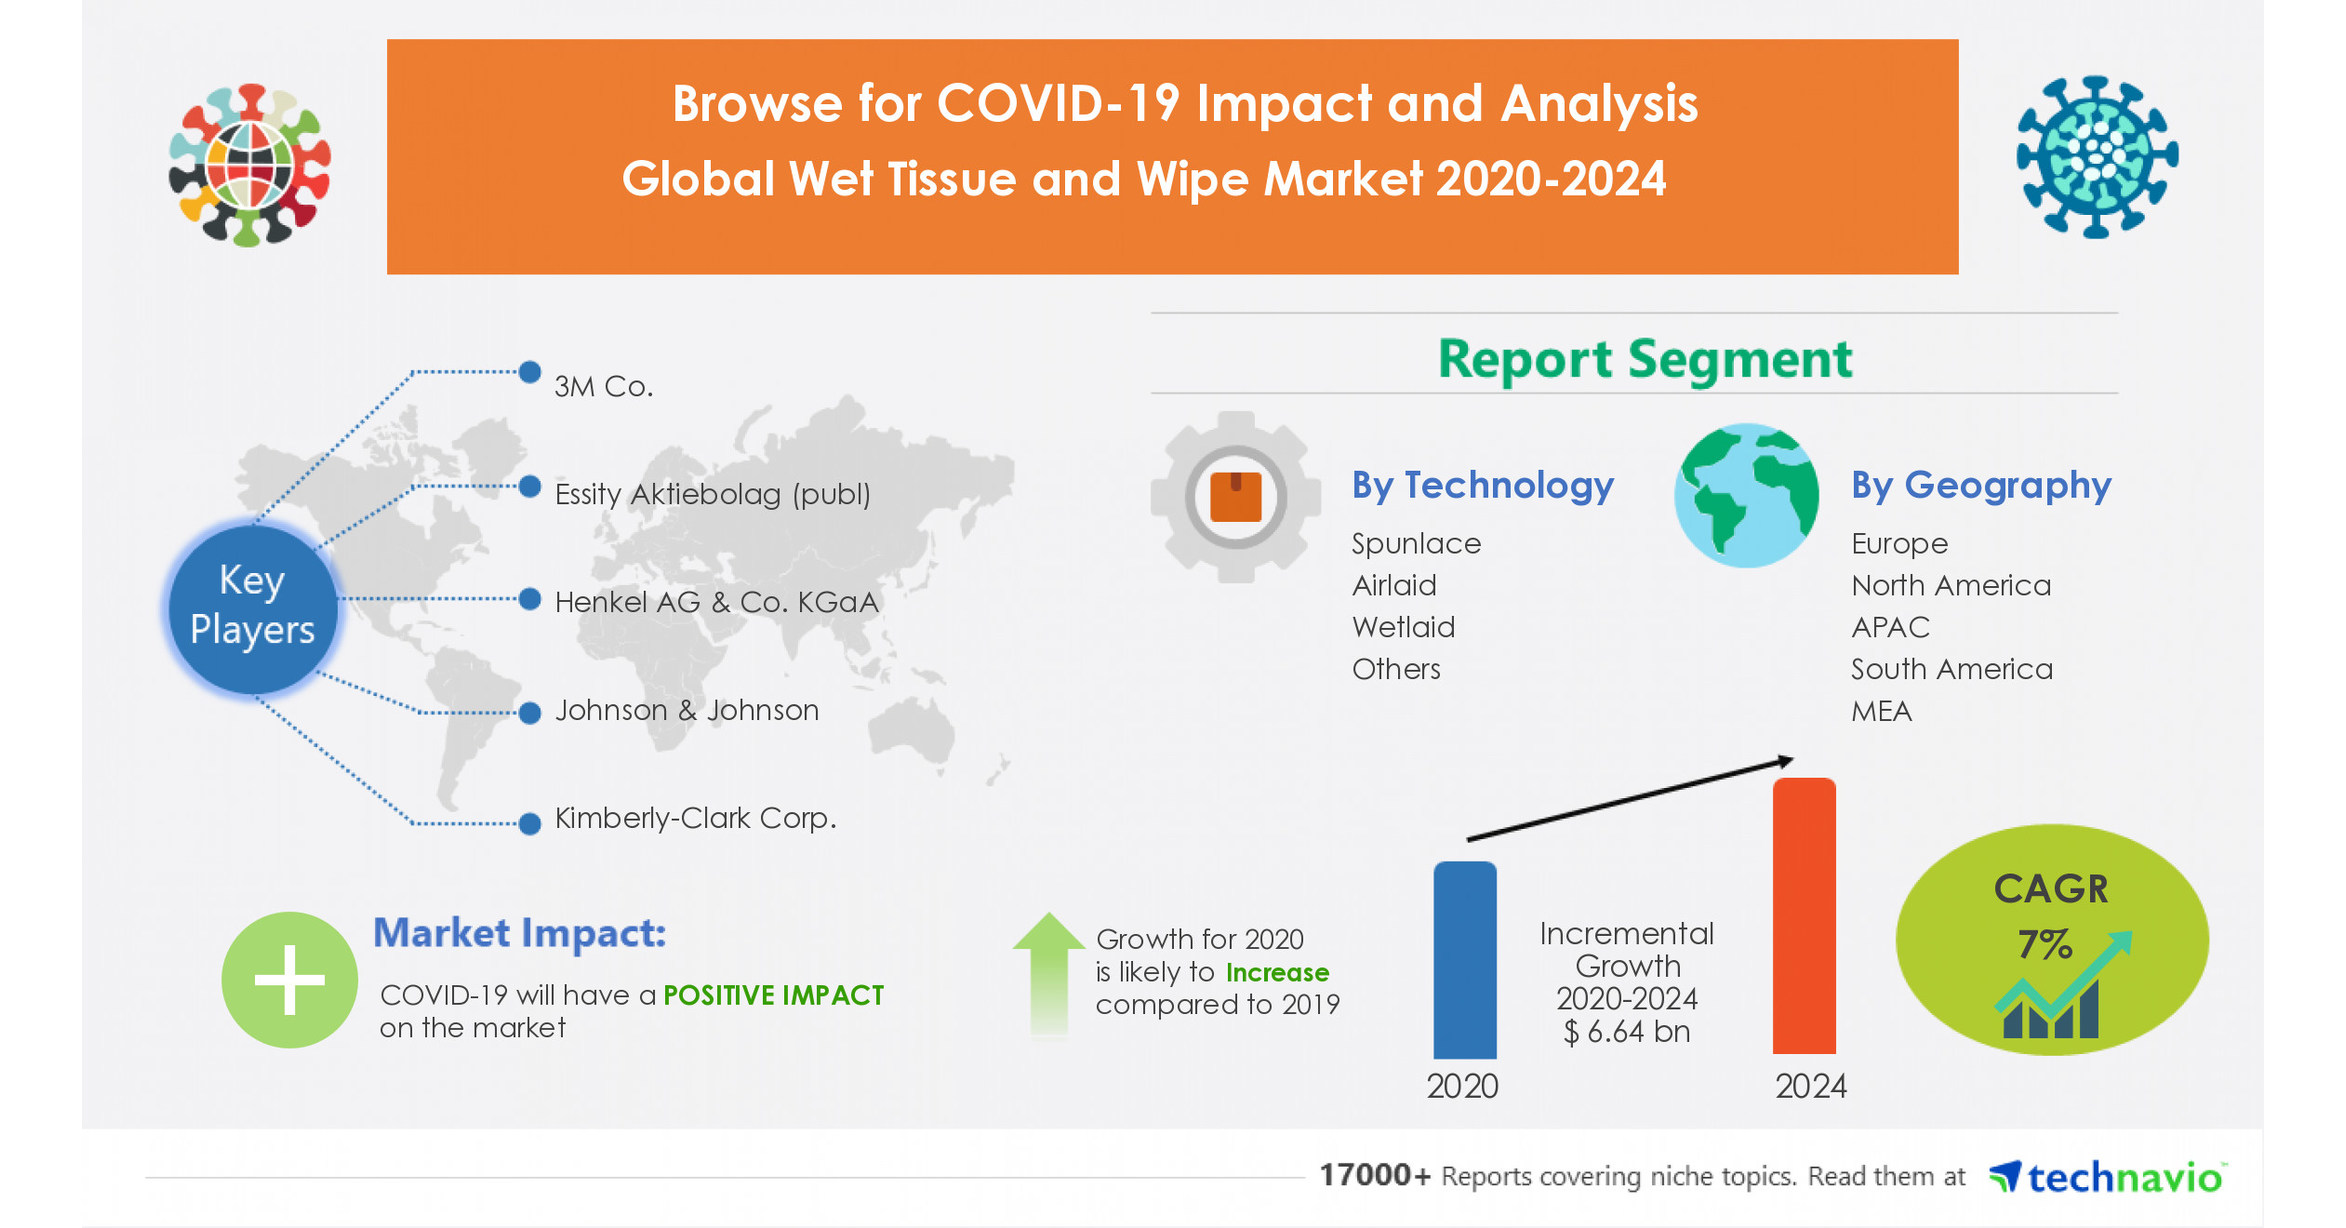  6.64 Billion Growth in Global Wet Tissue and Wipe Market 20202024